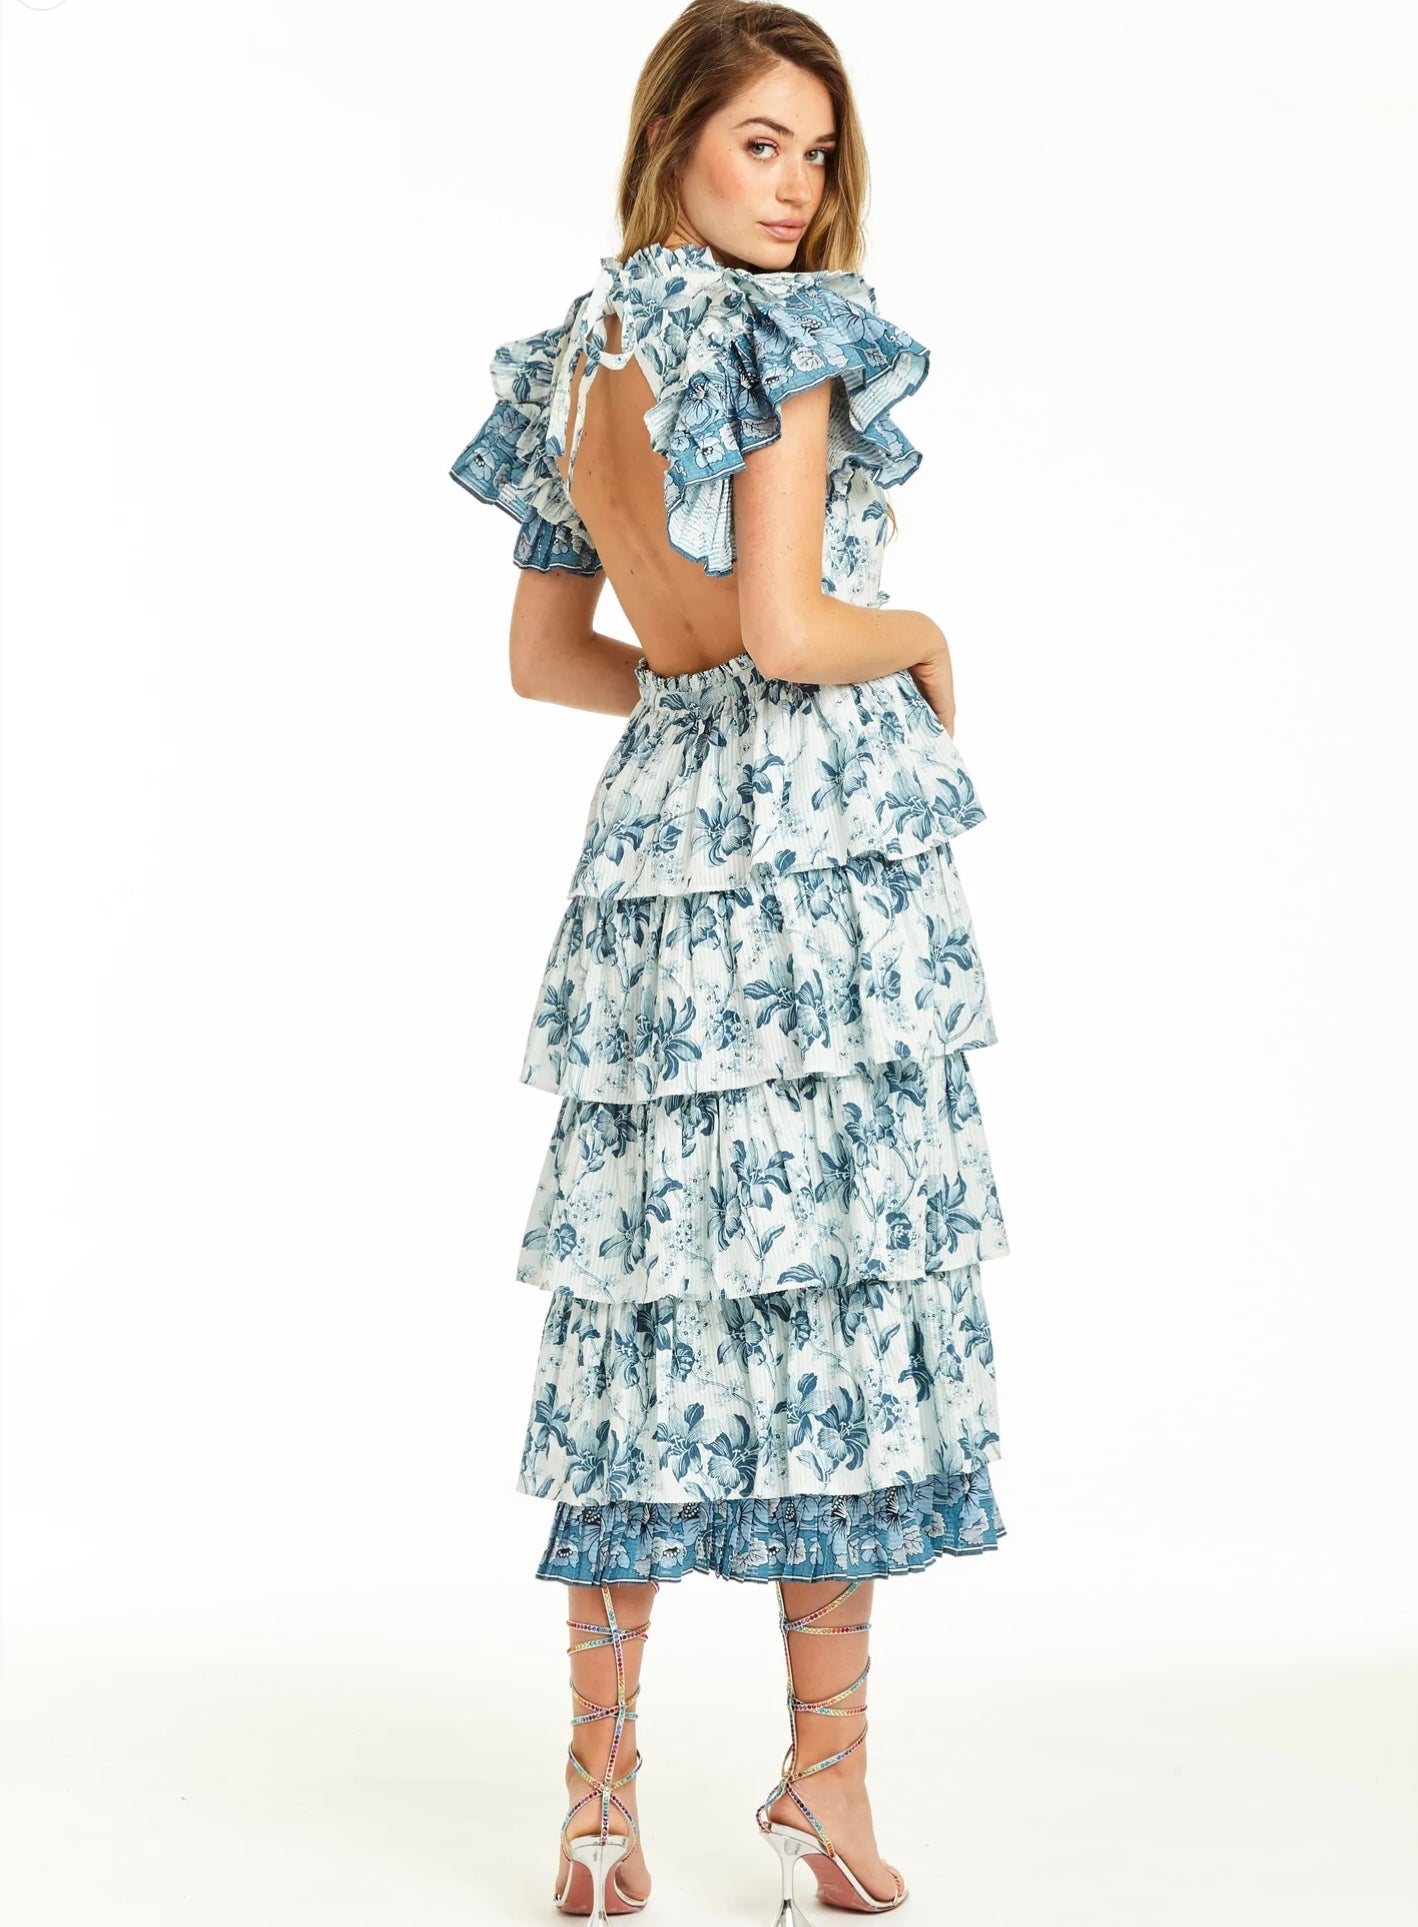 Love the Label Lucia Dress in Beryl Blue Print - Estilo Boutique